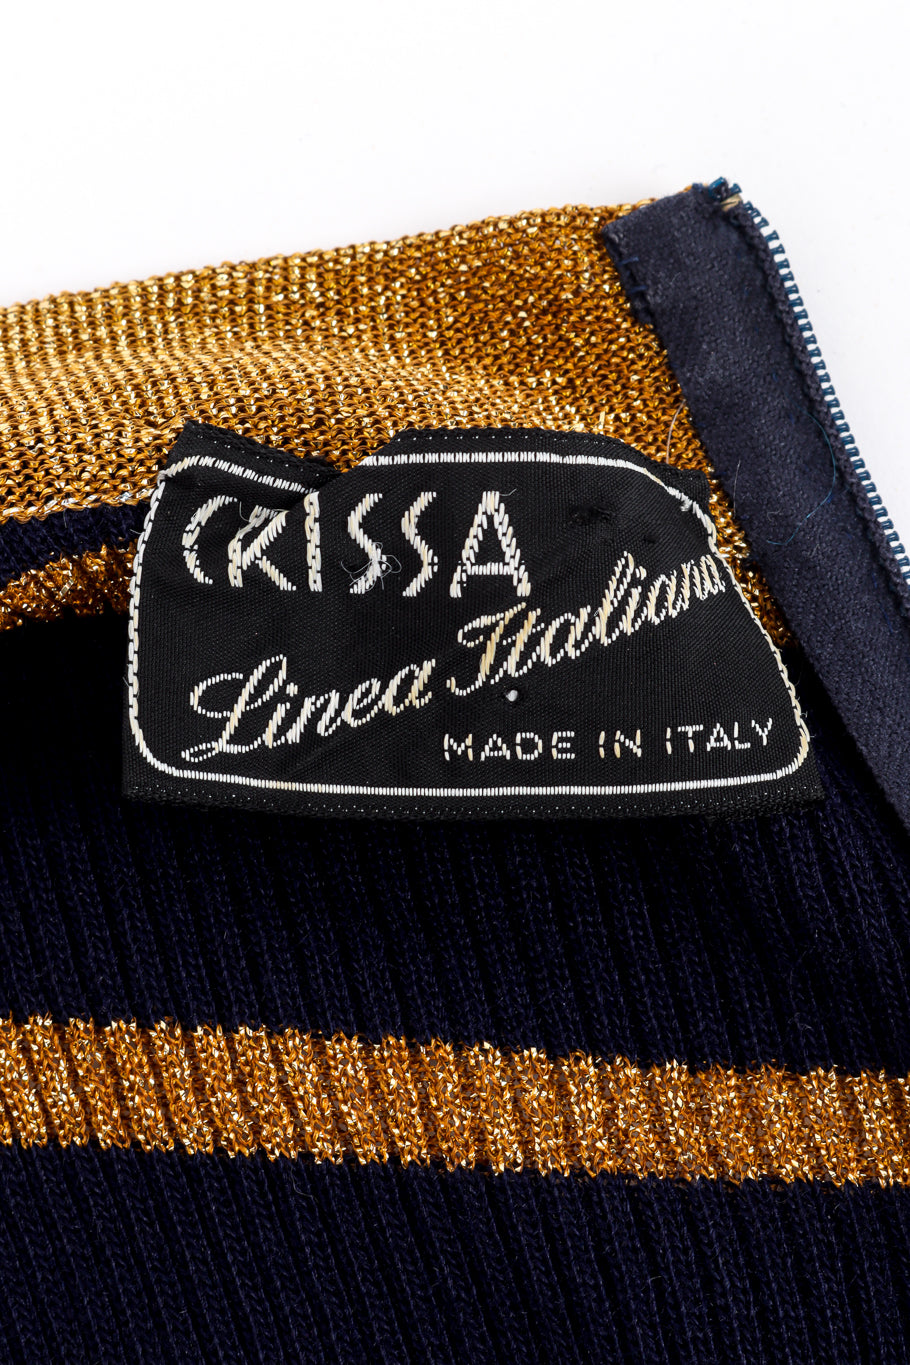 Vintage Lillie Rubin Metallic Stripe Knit Dress signature label closeup @recess la